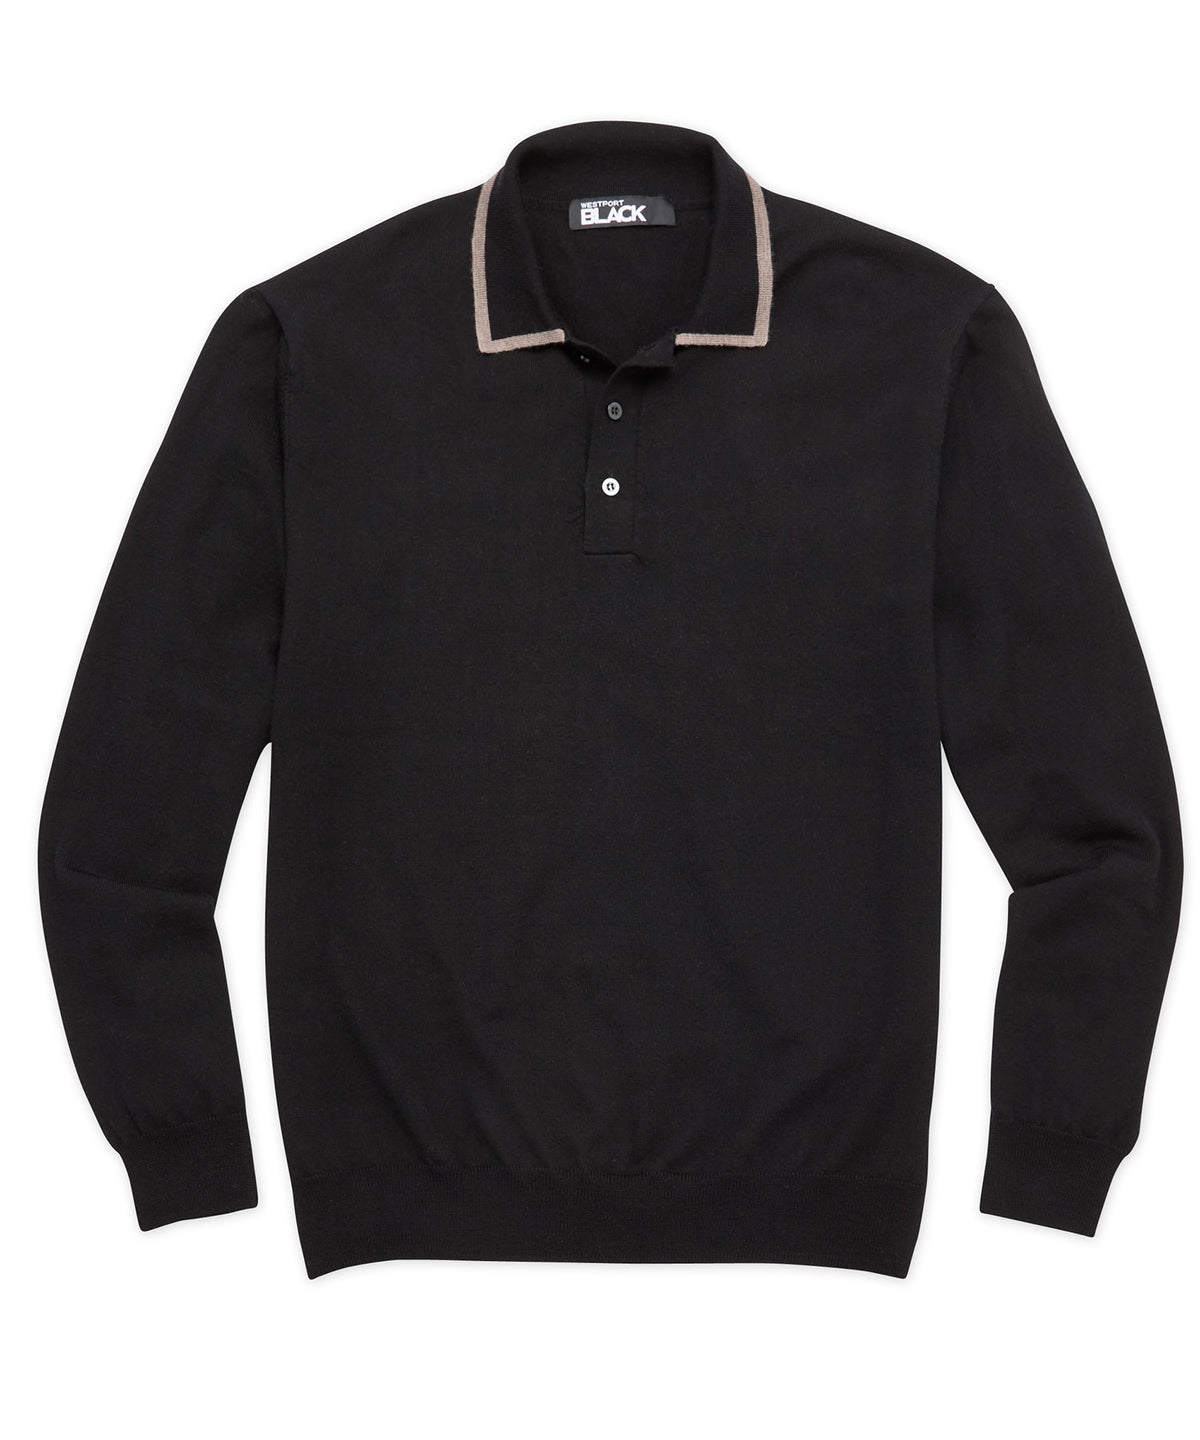 Westport Black Tipped Merino Wool Polo Shirt, Men's Big & Tall